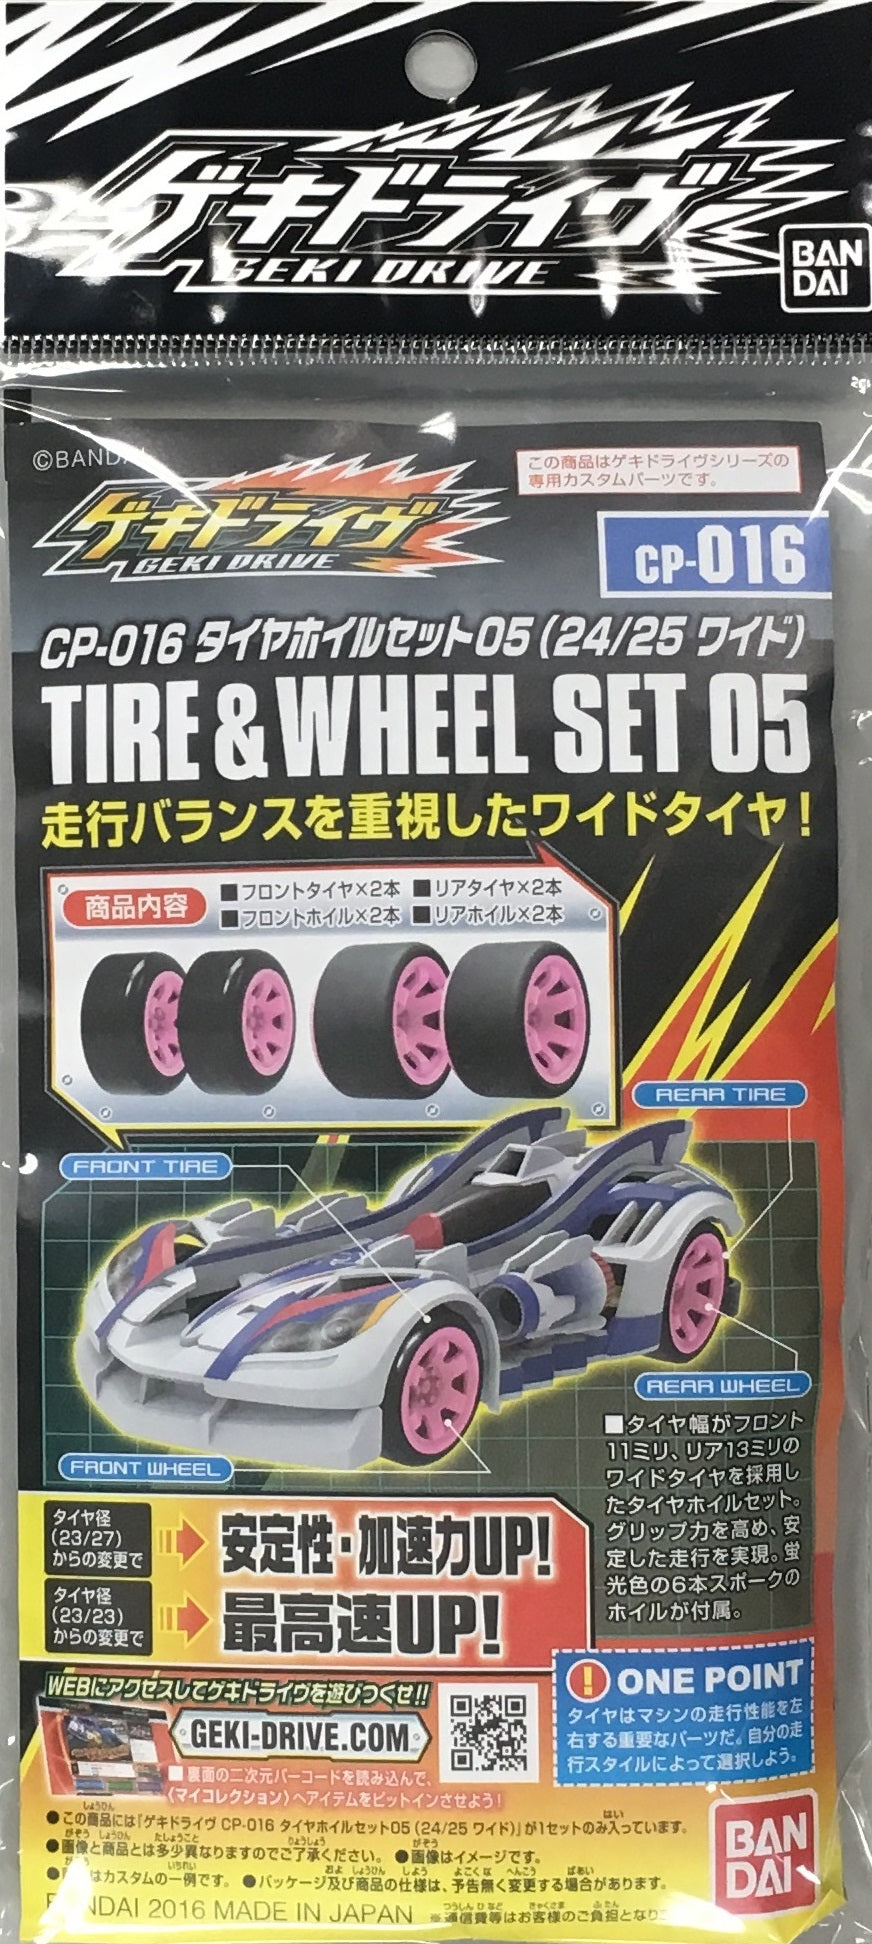 CP-016 Tire & Wheel Set 05